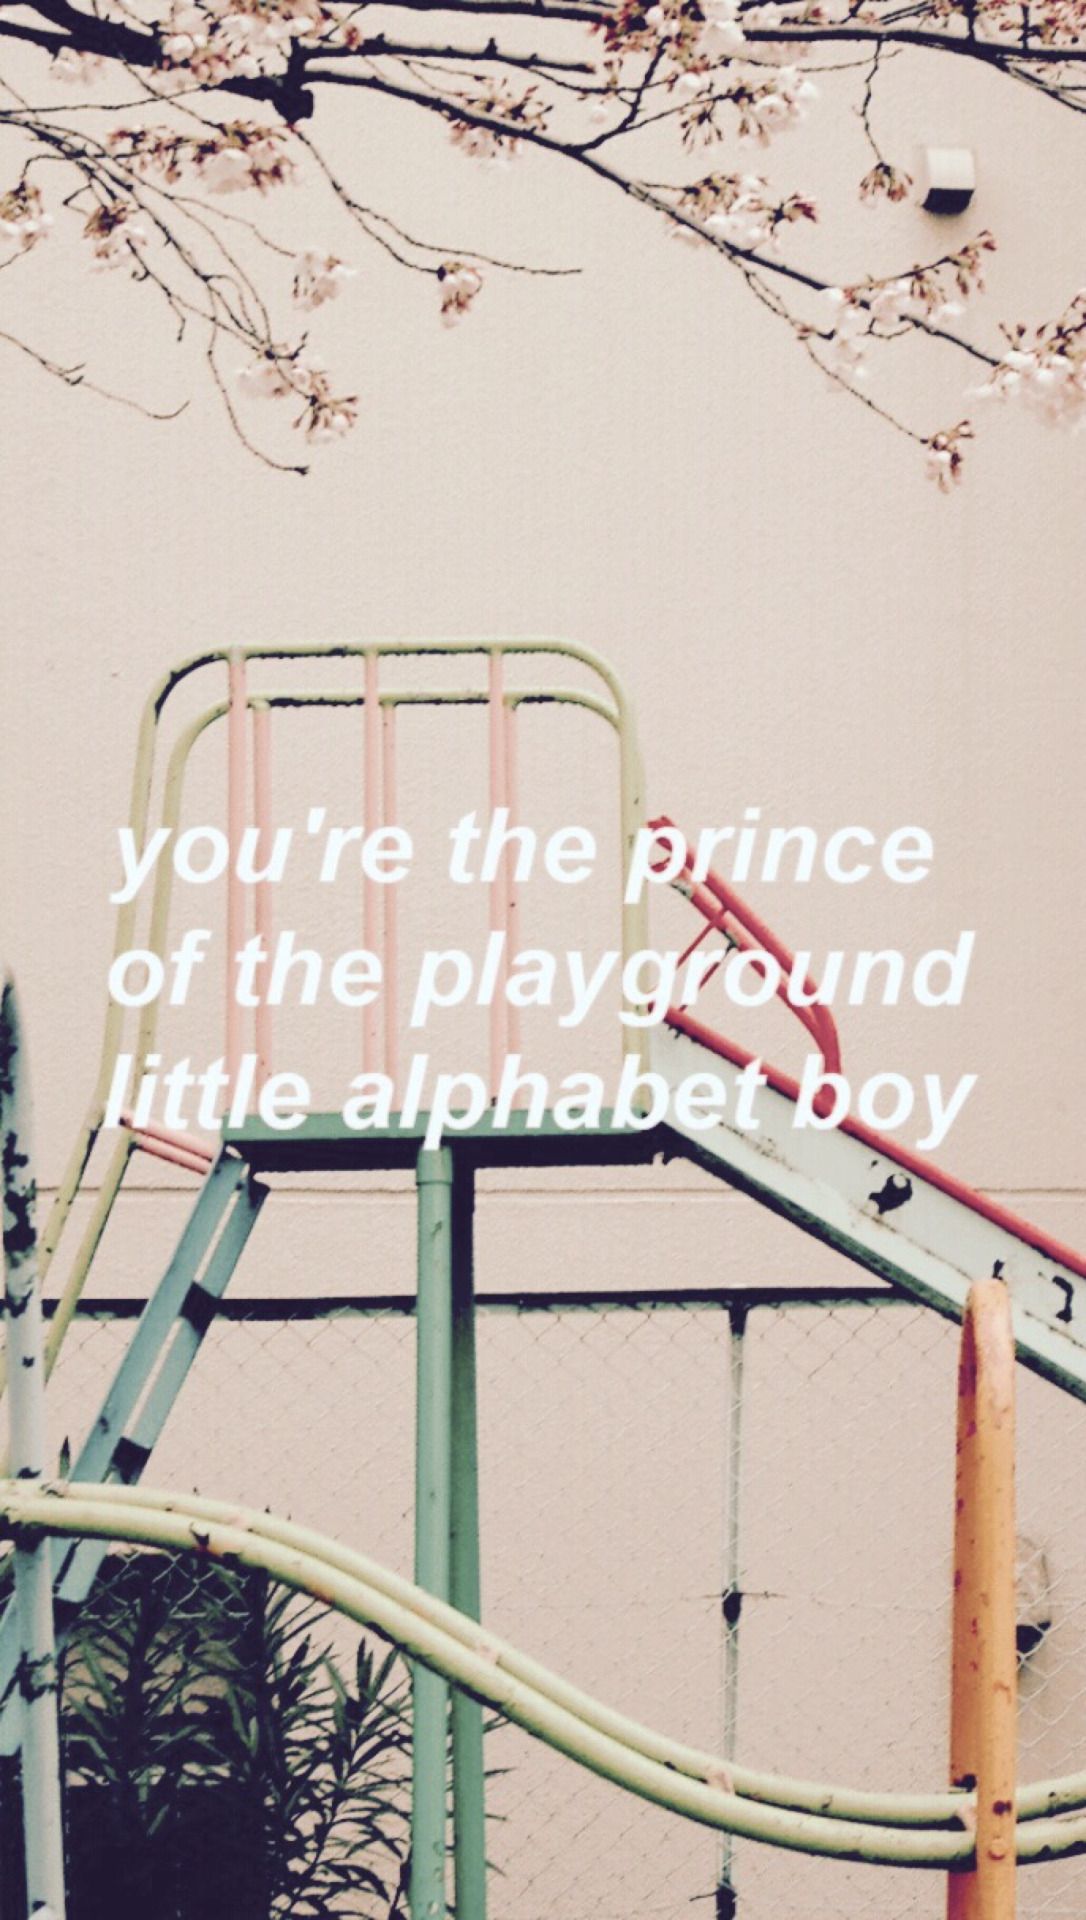 Alphabet Boy Melanie Martinez Lyrics